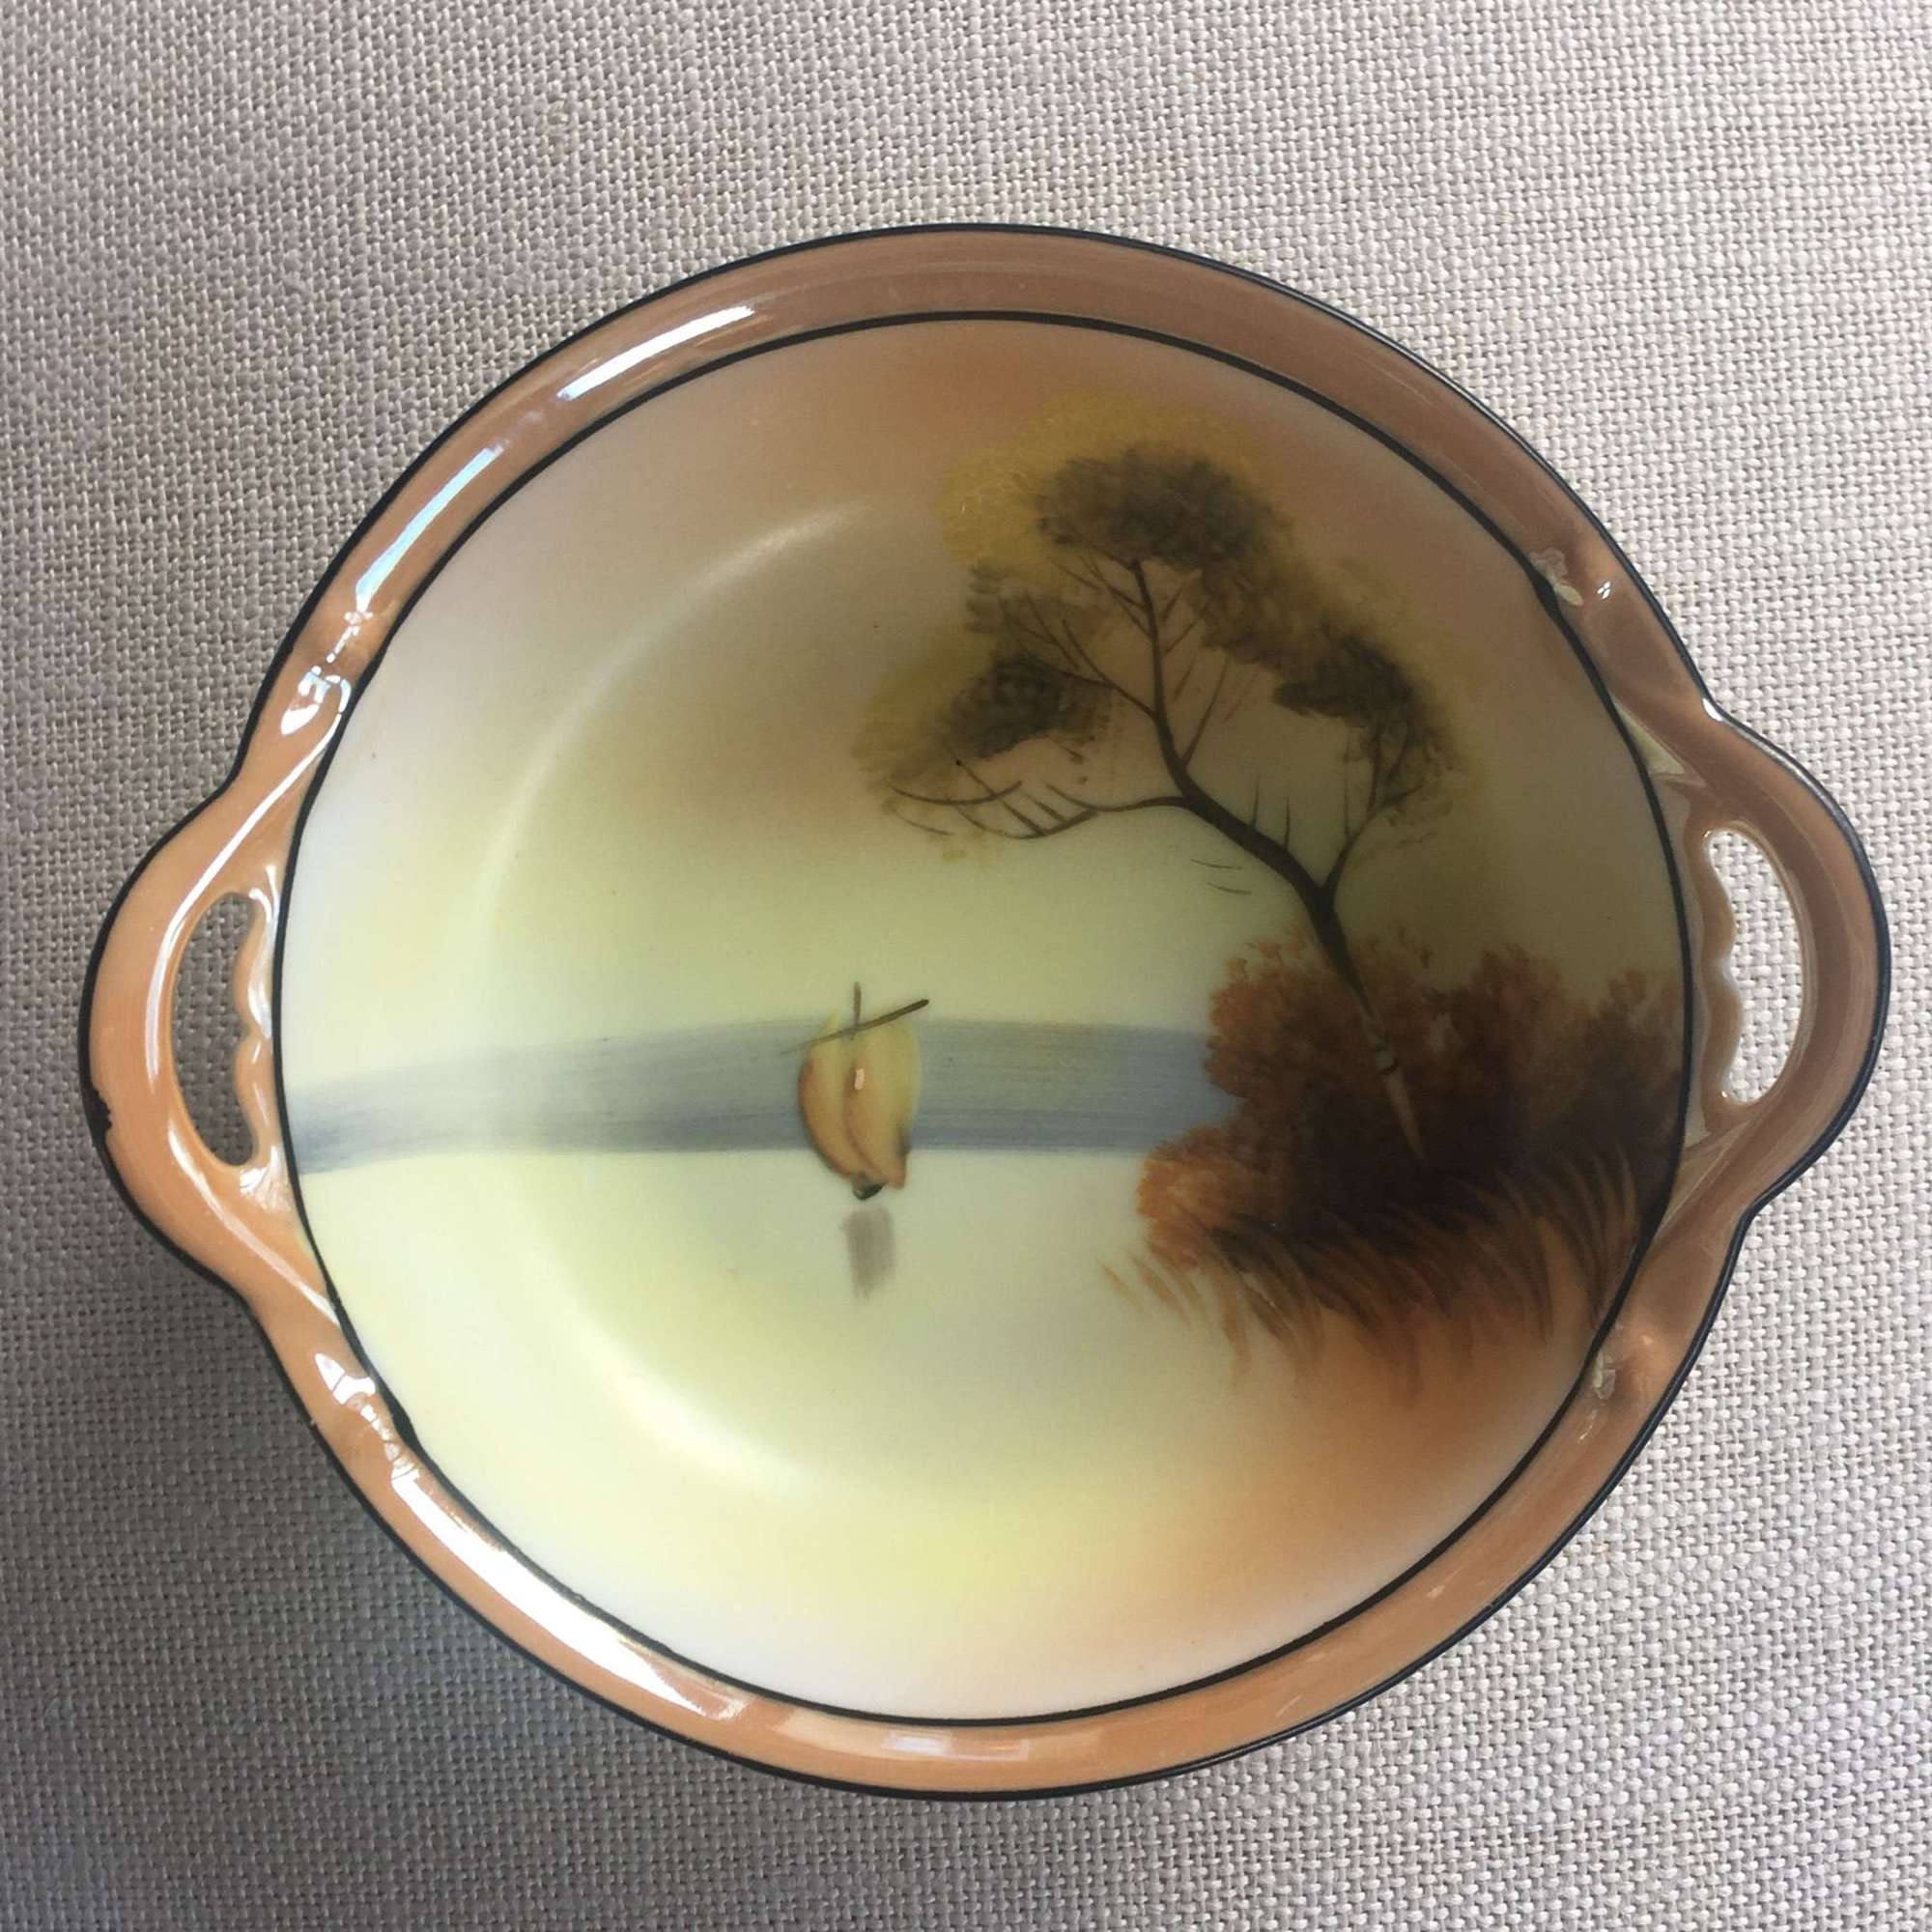 Vintage Noritake lustre ware porcelain dish with handles